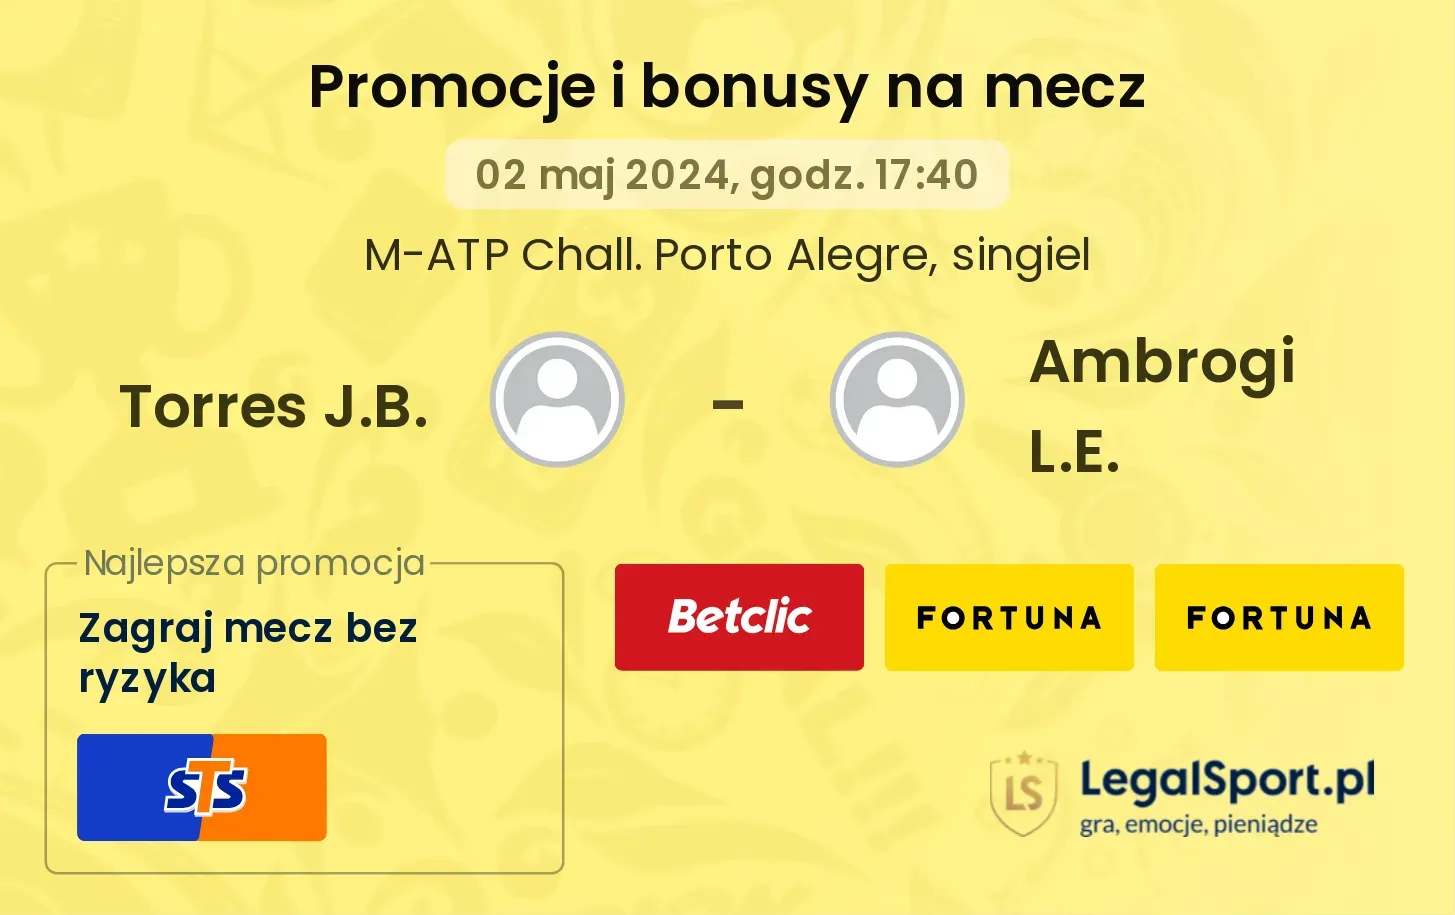 Torres J.B. - Ambrogi L.E. promocje bonusy na mecz